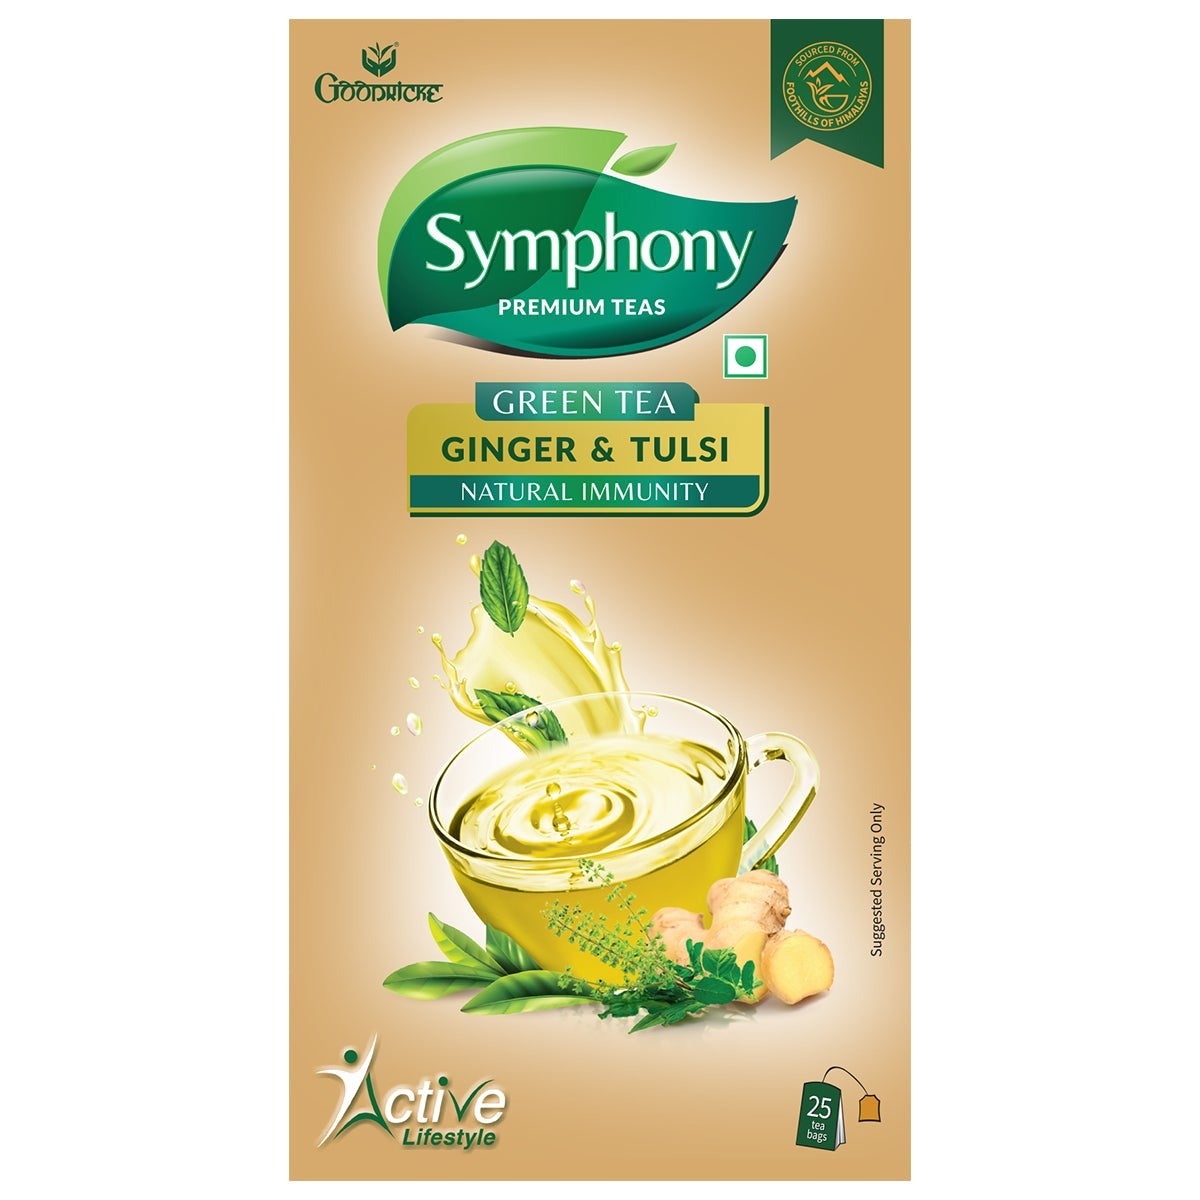 Symphony Ginger & Tulsi Green Tea, 25 Tea Bags (Pack of 6)